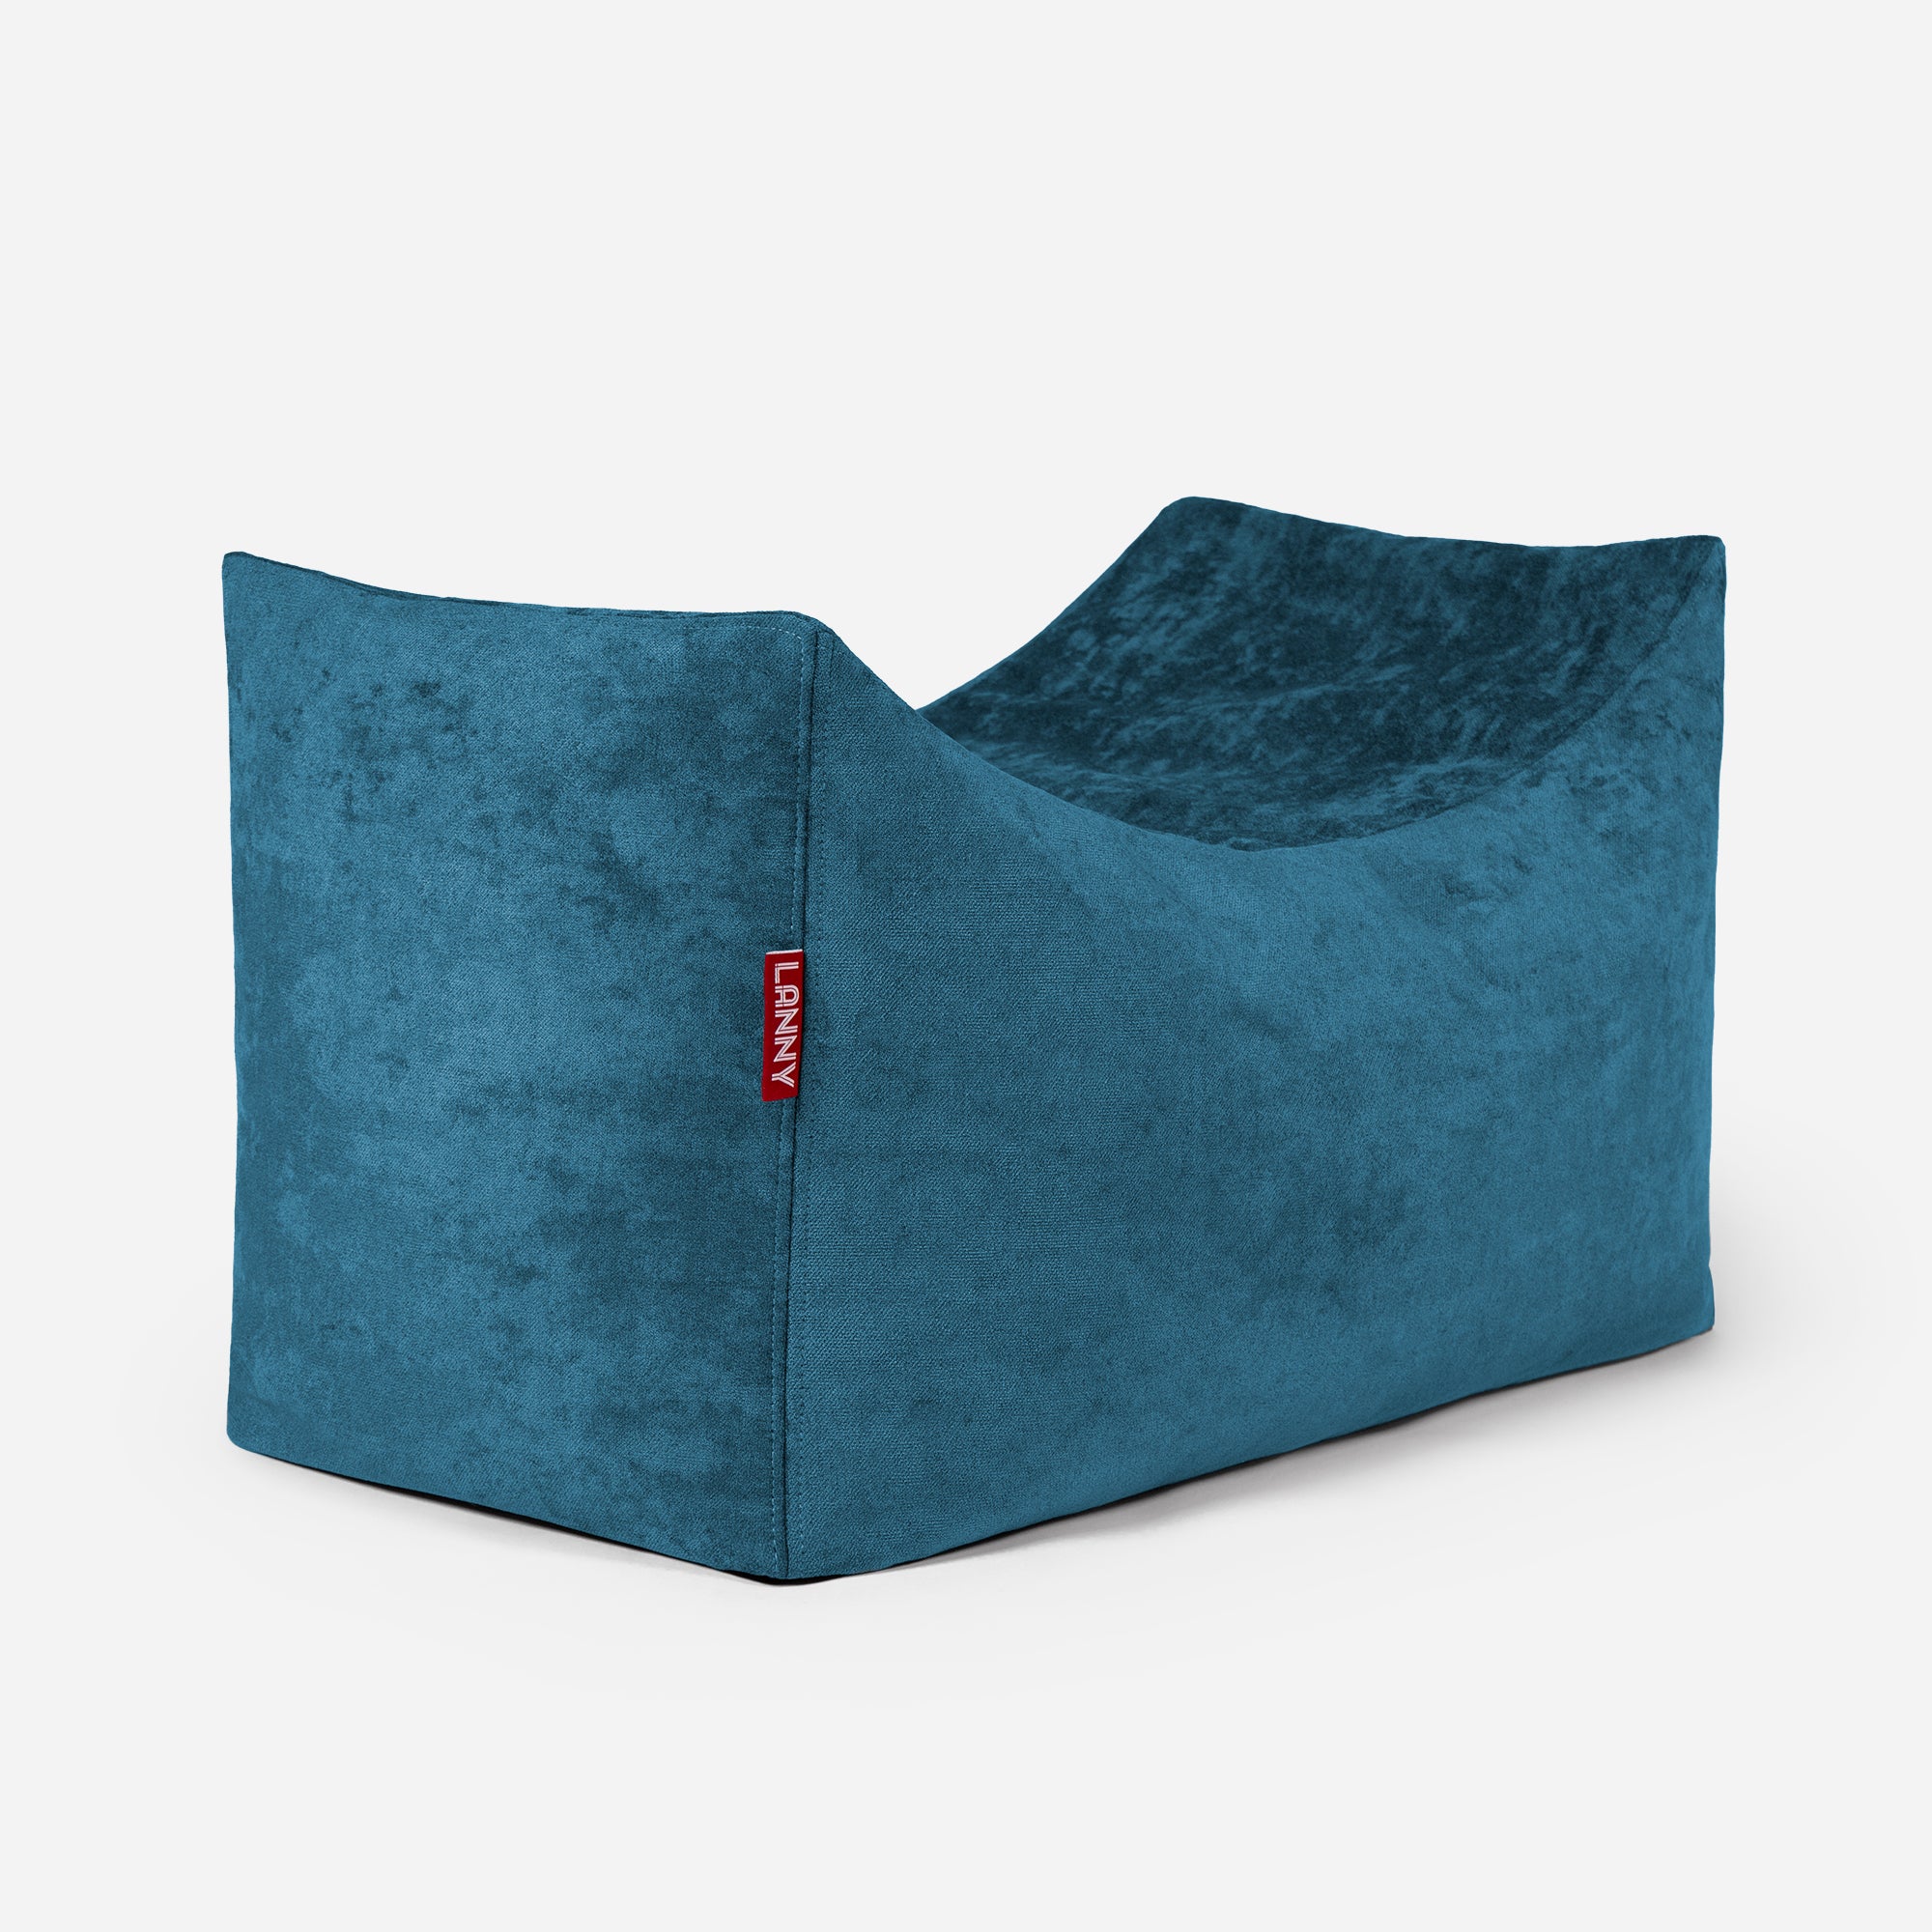 Quadro Aldo Aqua Bean bag Chair